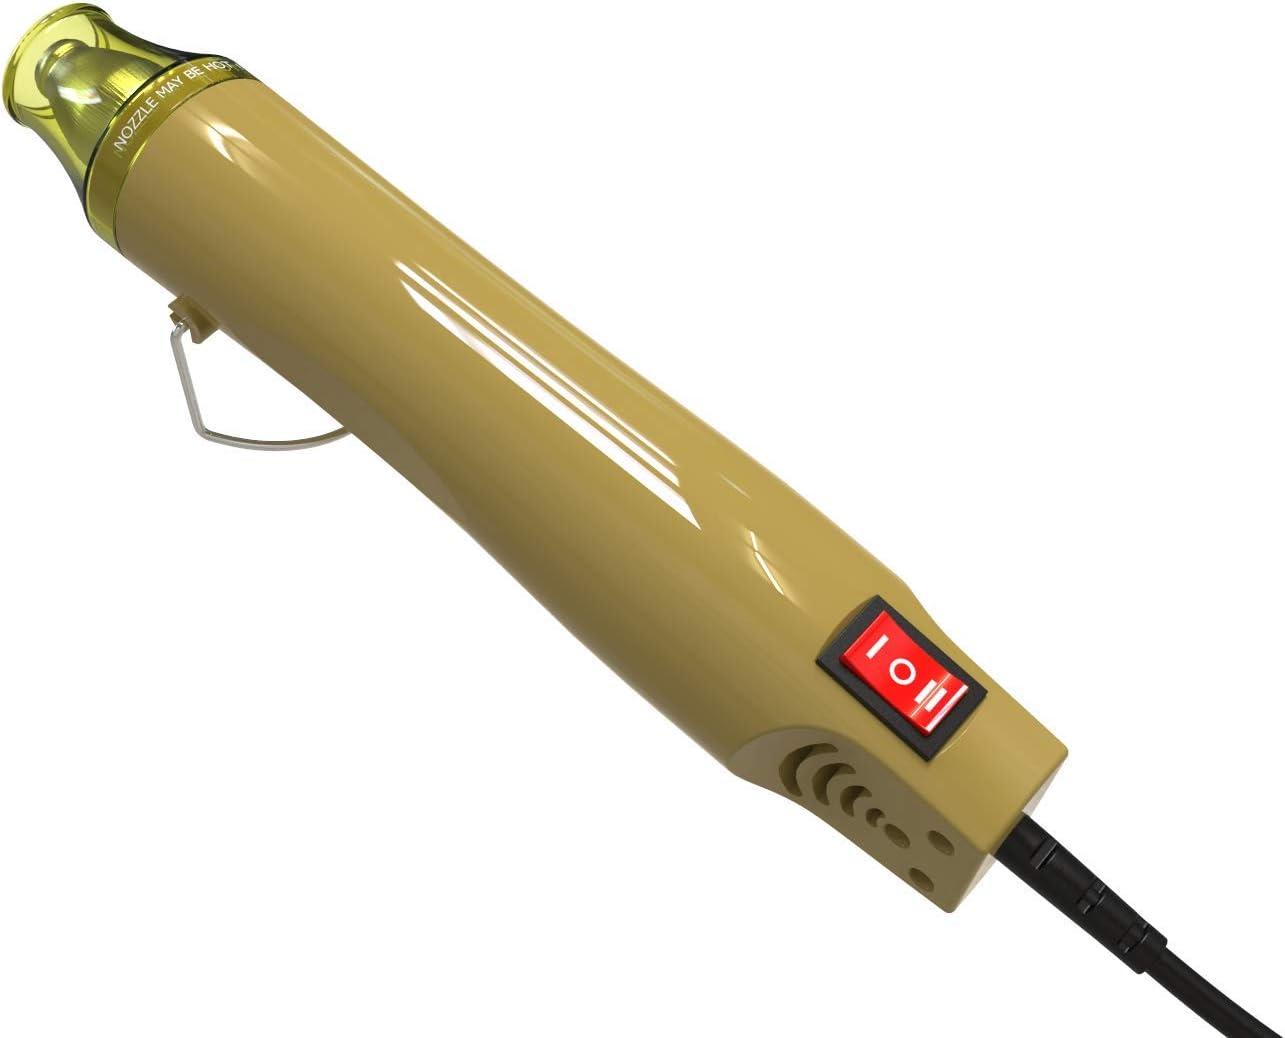 Homidic Heat Gun Upgraded to 662, Dual-Temperature Professional Heat Tool,  Mini Handheld Hot Air Gun for Embossing Shrink Wrapping Paint Crafts  Electronics DIY